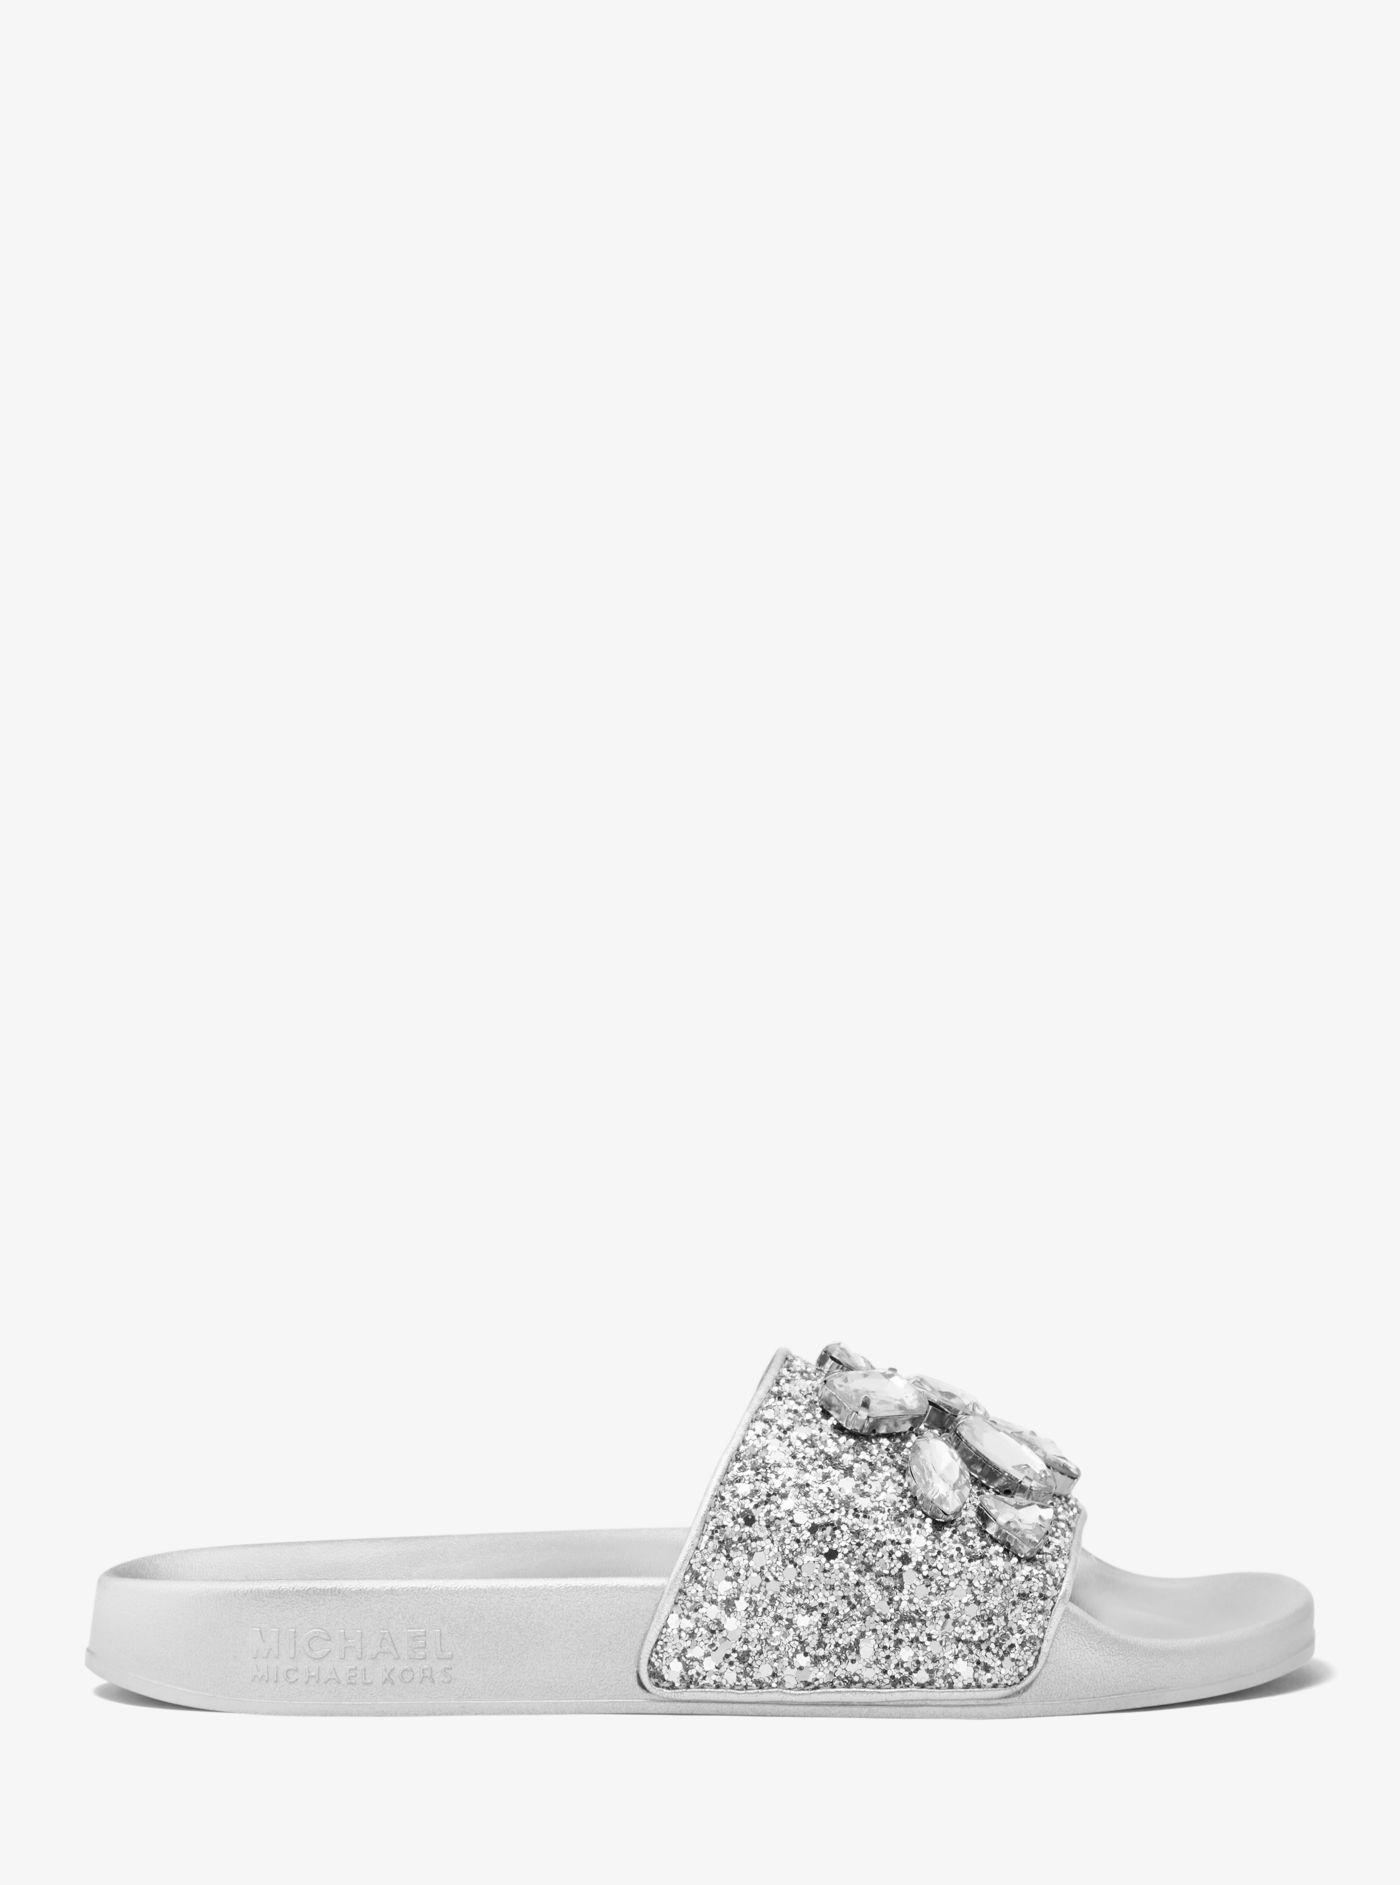 Michael Kors Gilmore Jewel Embellished Glitter Slide Sandal in Metallic |  Lyst